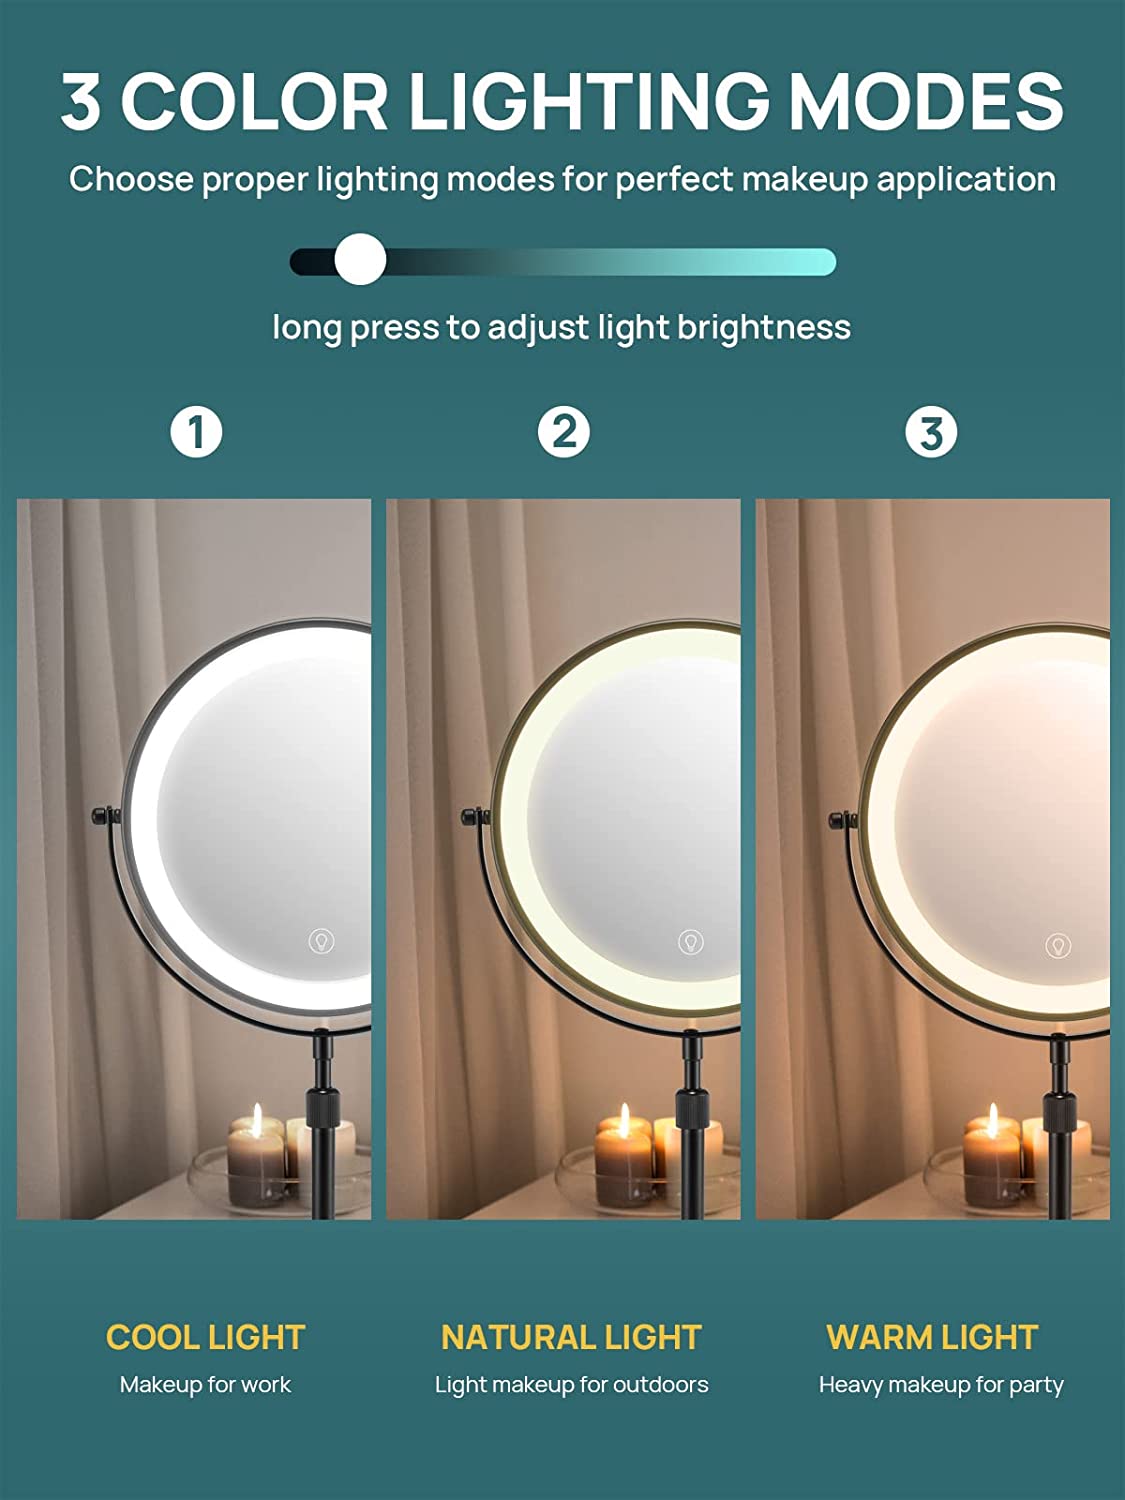 Omiro Tabletop LED Mirror